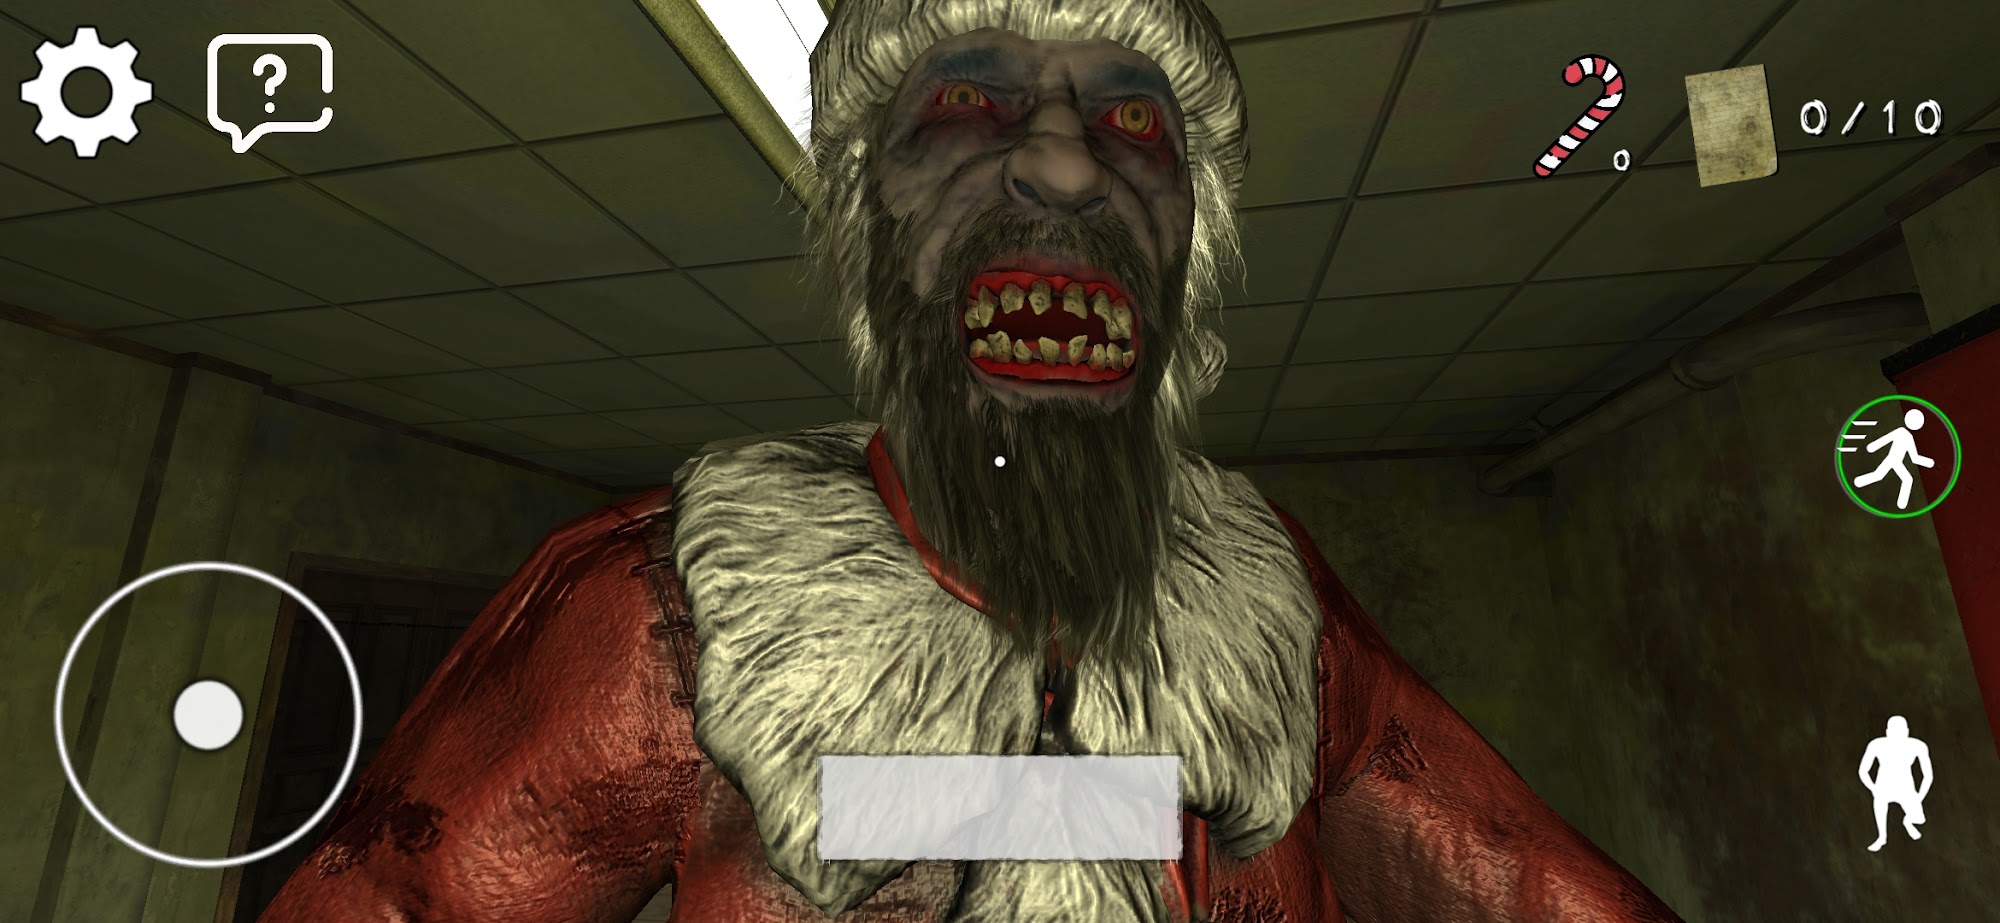 Download Scary Santa Claus Horror Game für Android kostenlos.